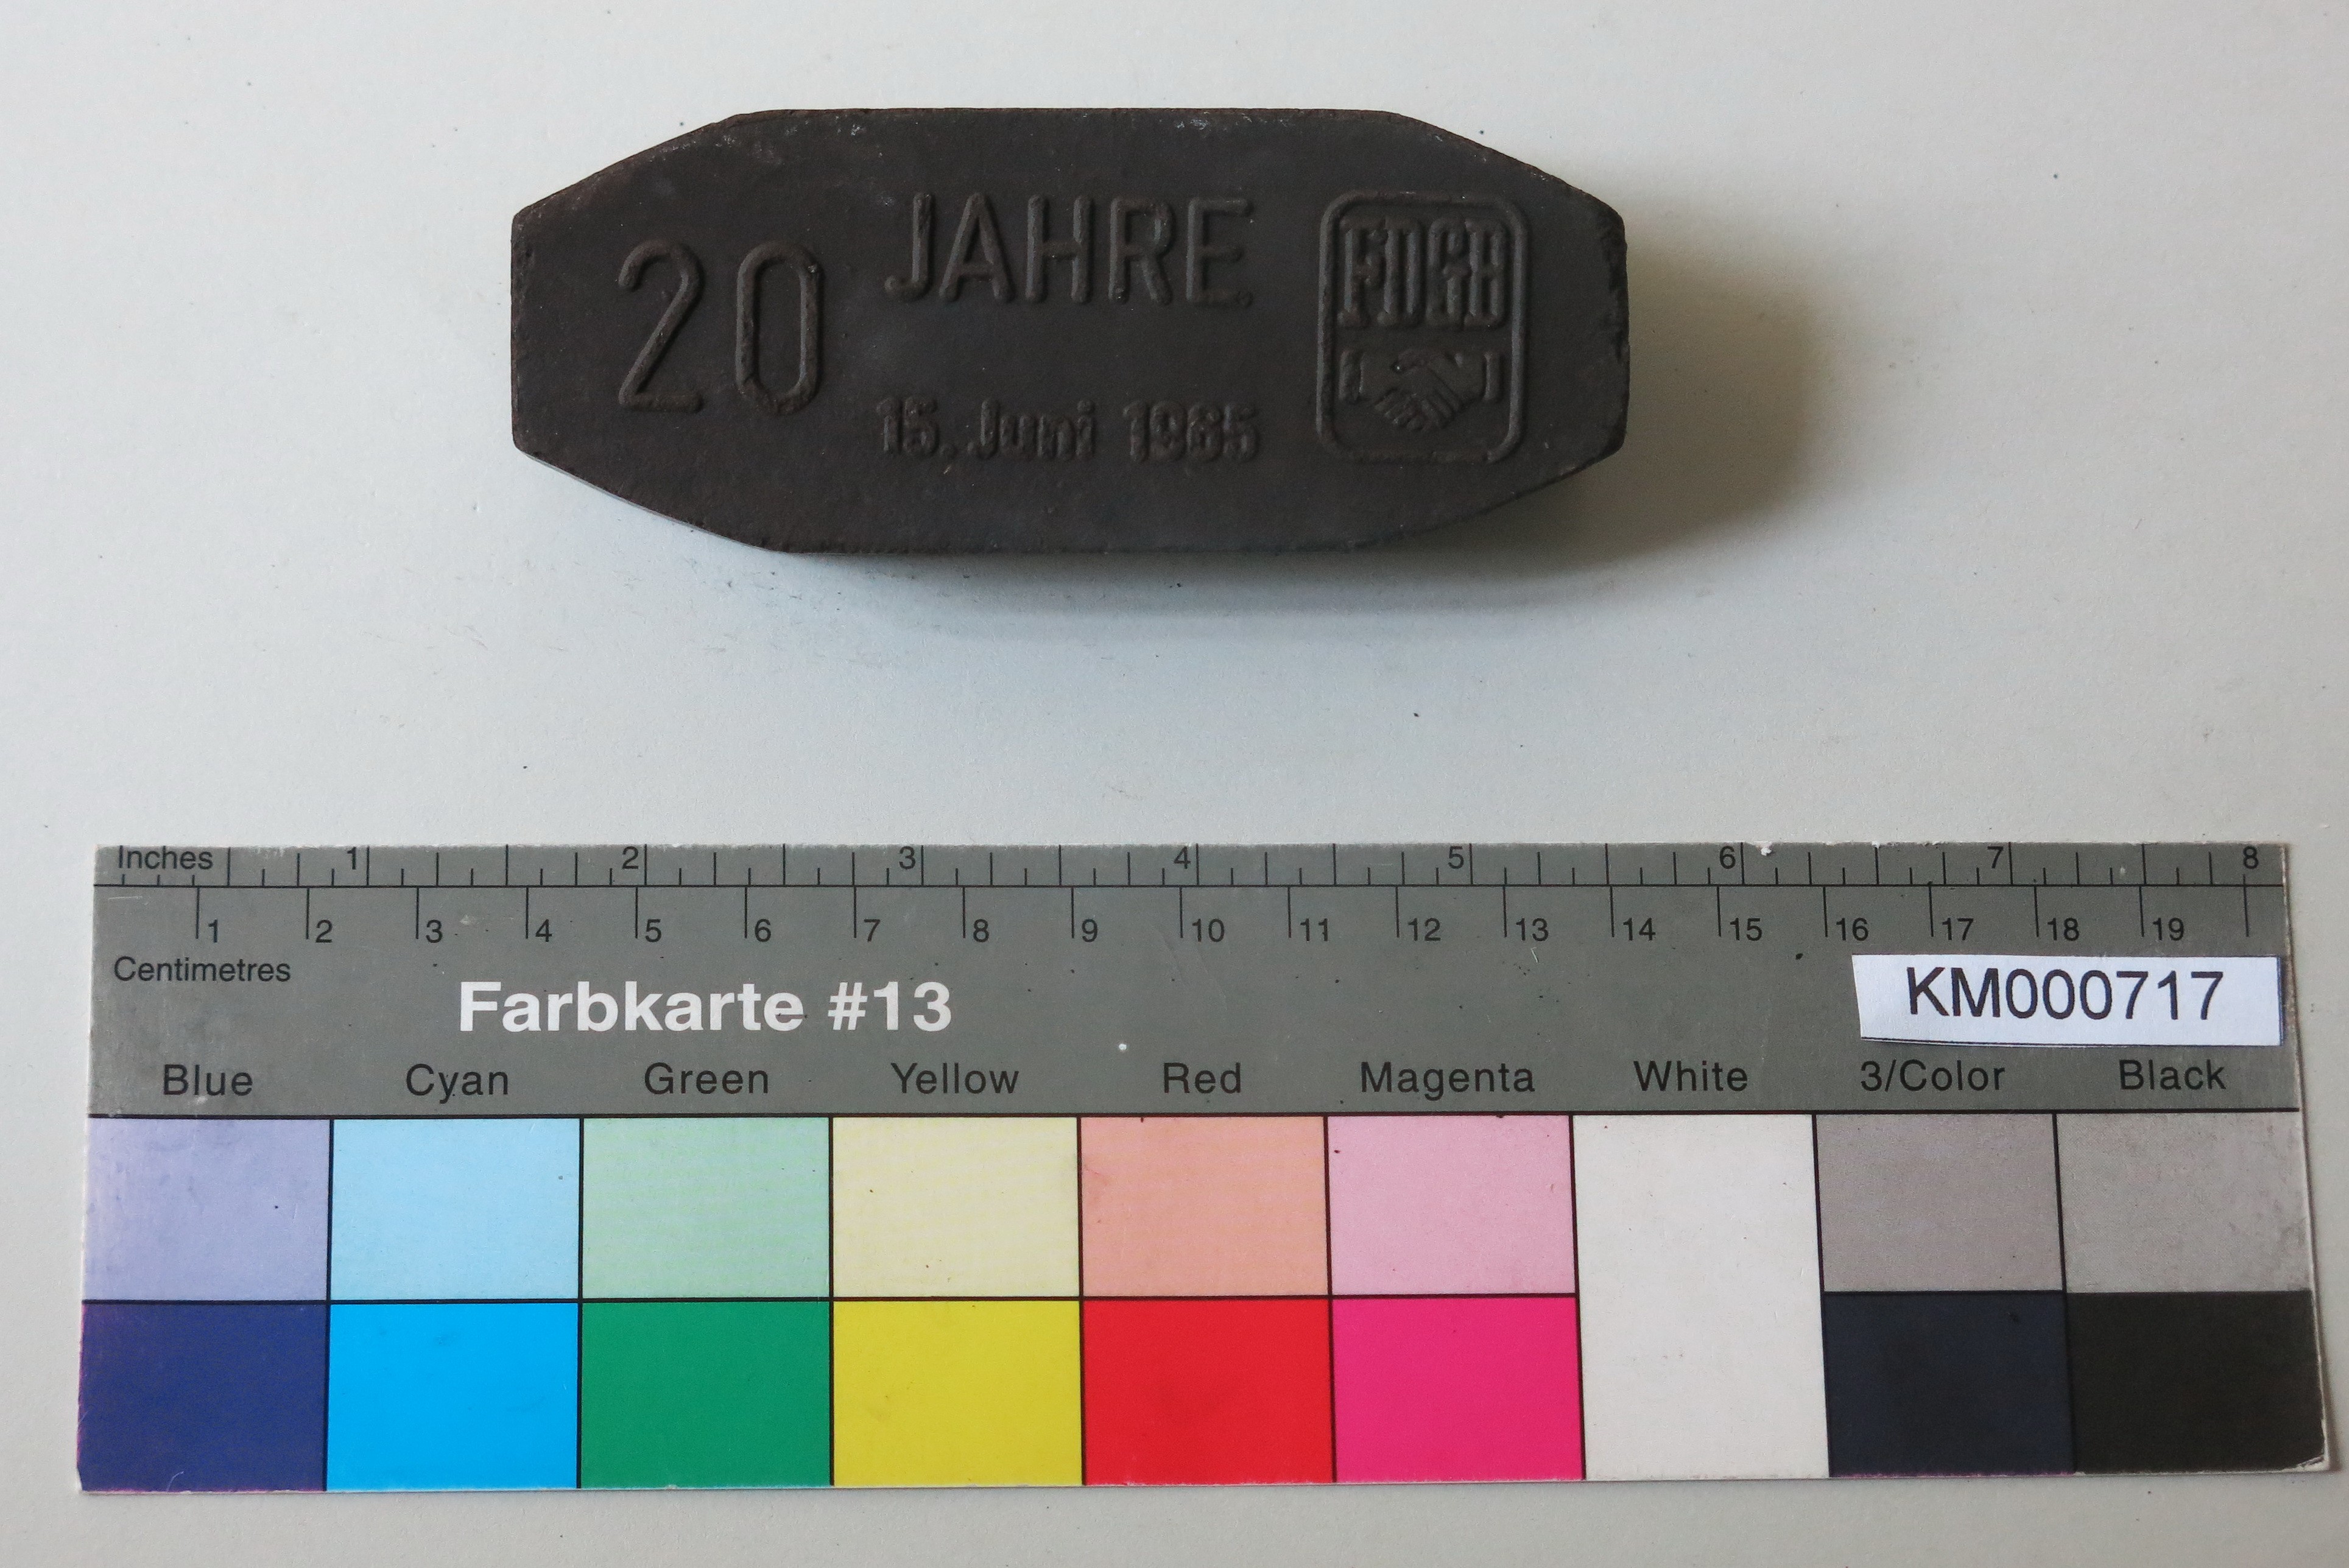 Zierbrikett "20 JAHRE 15. Juni 1965 FDGB" (Energiefabrik Knappenrode CC BY-SA)